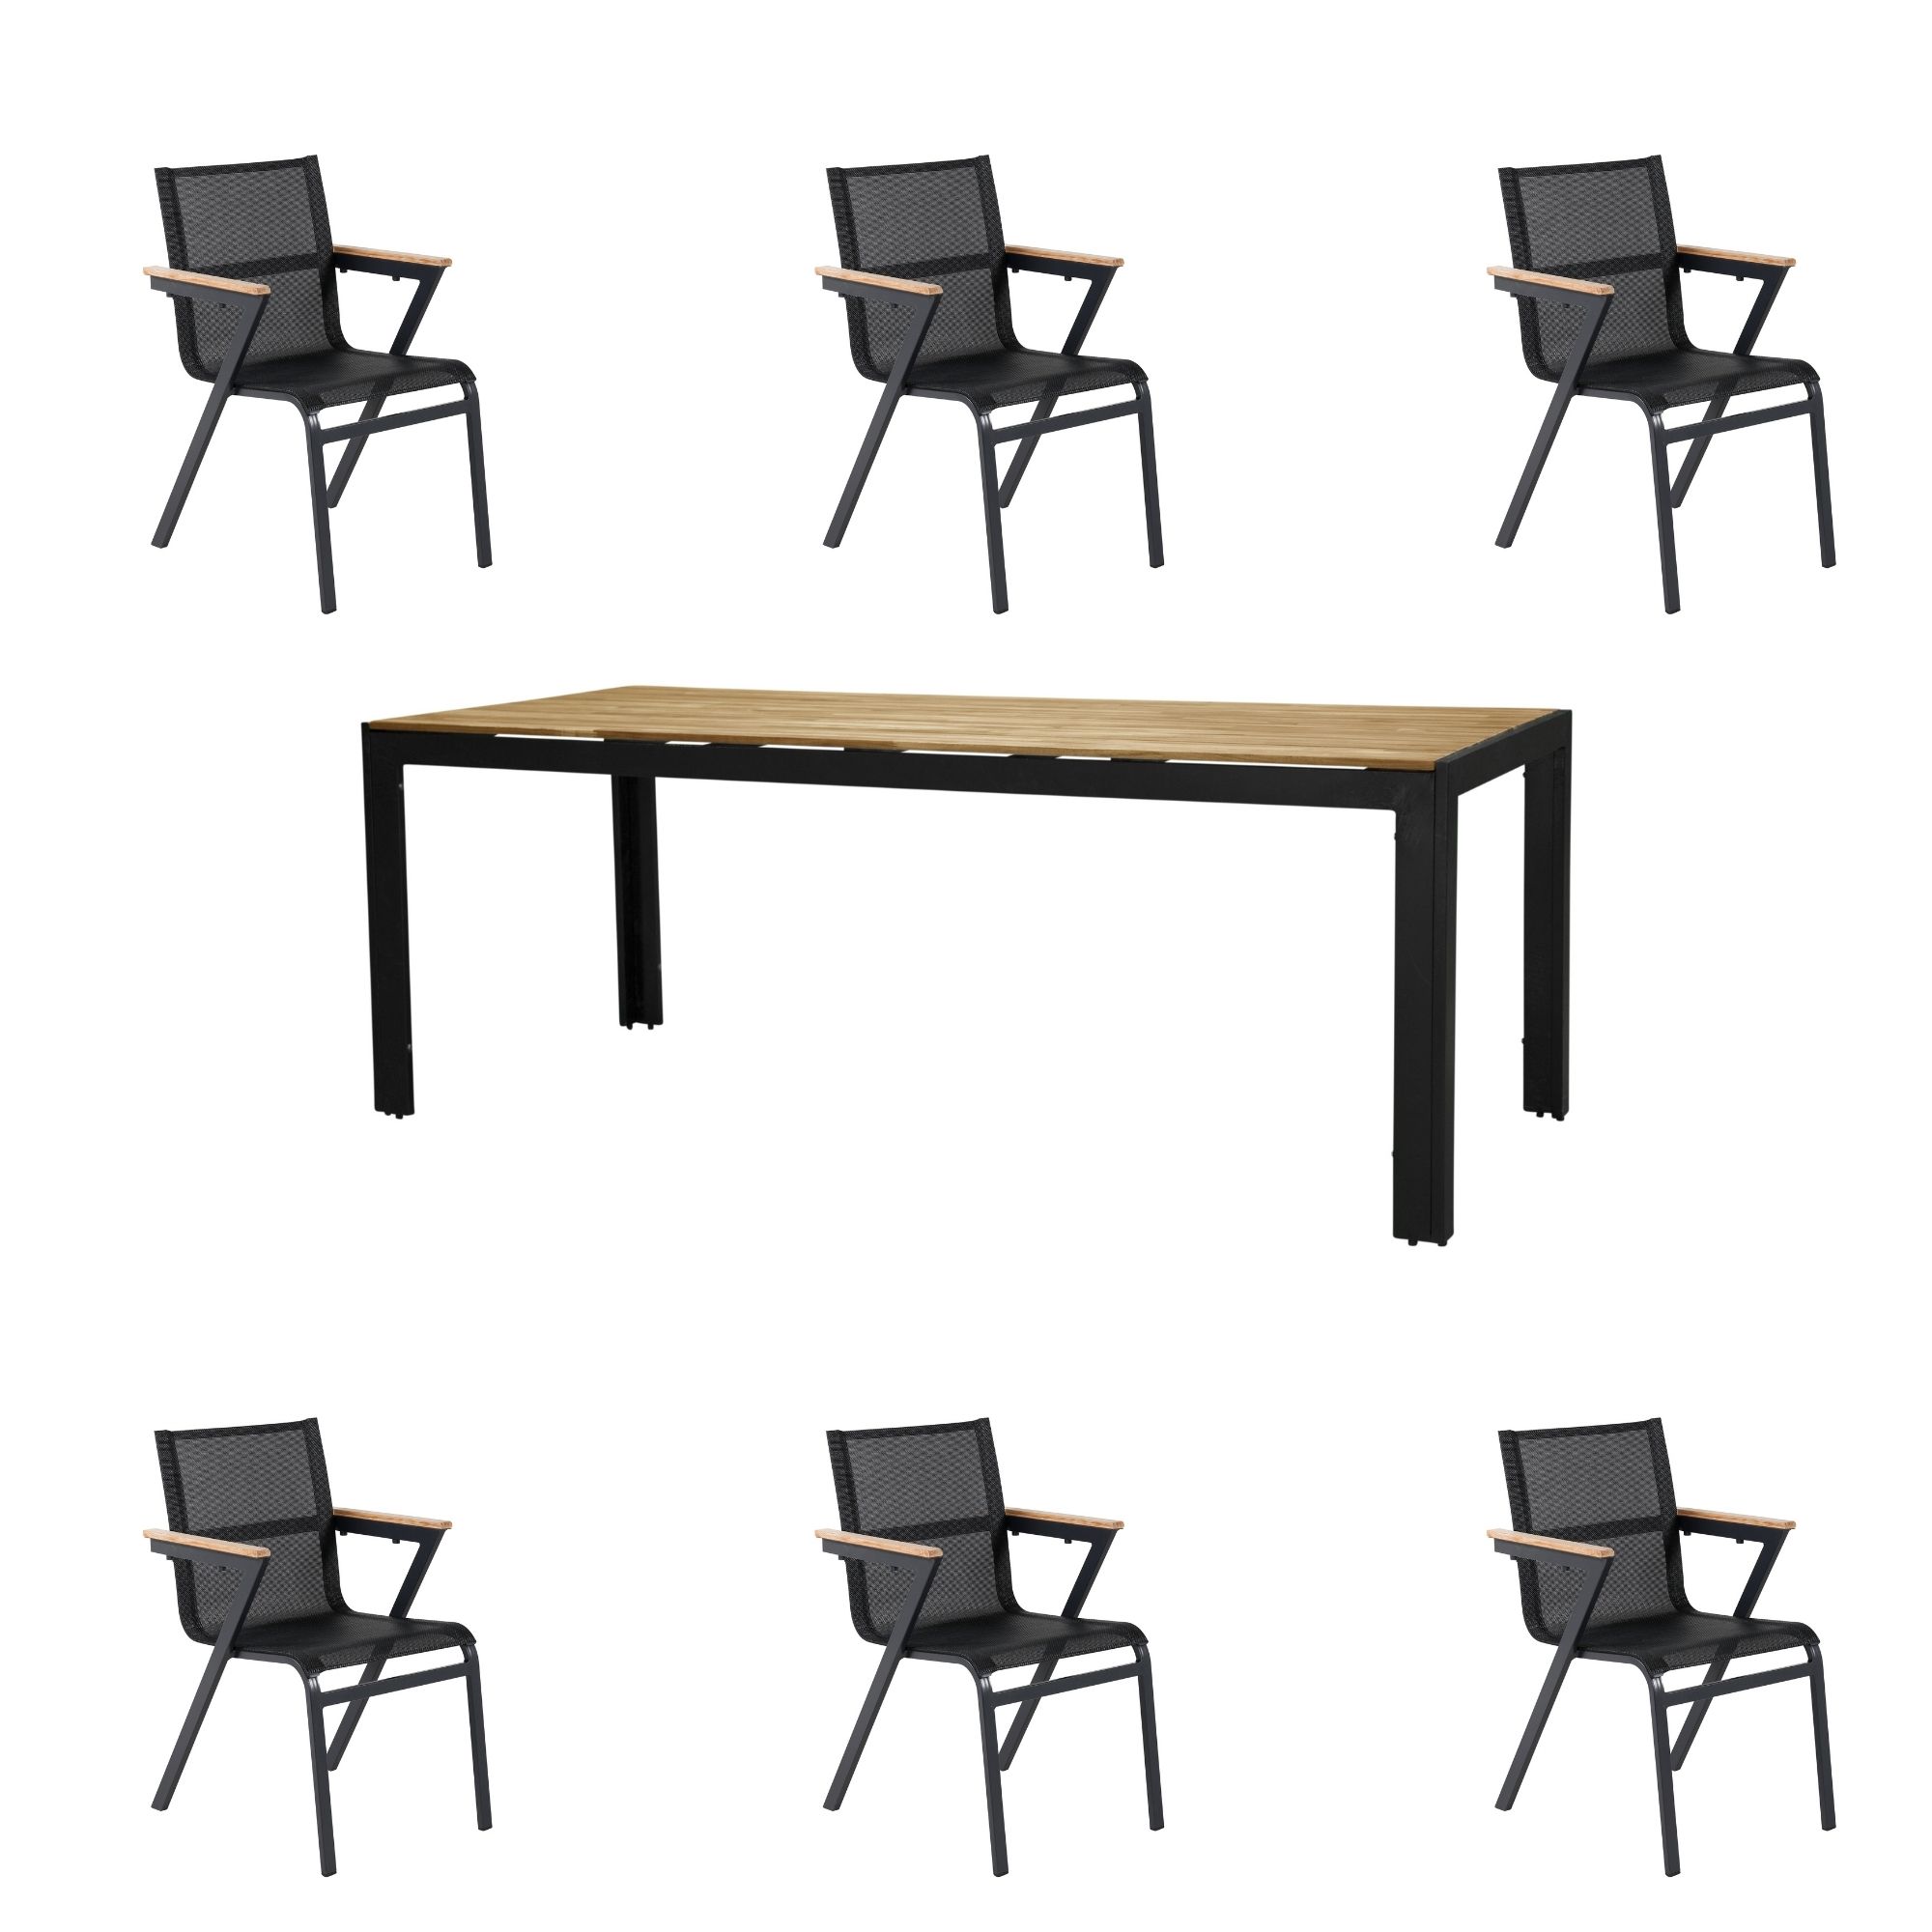 Venture Design - Bois Garden Table 205x90 cm - Acacia/Black Legs with 6 pcs. Mexico Garden Chairs -  Alu/Textilene/Teak box - Bundle